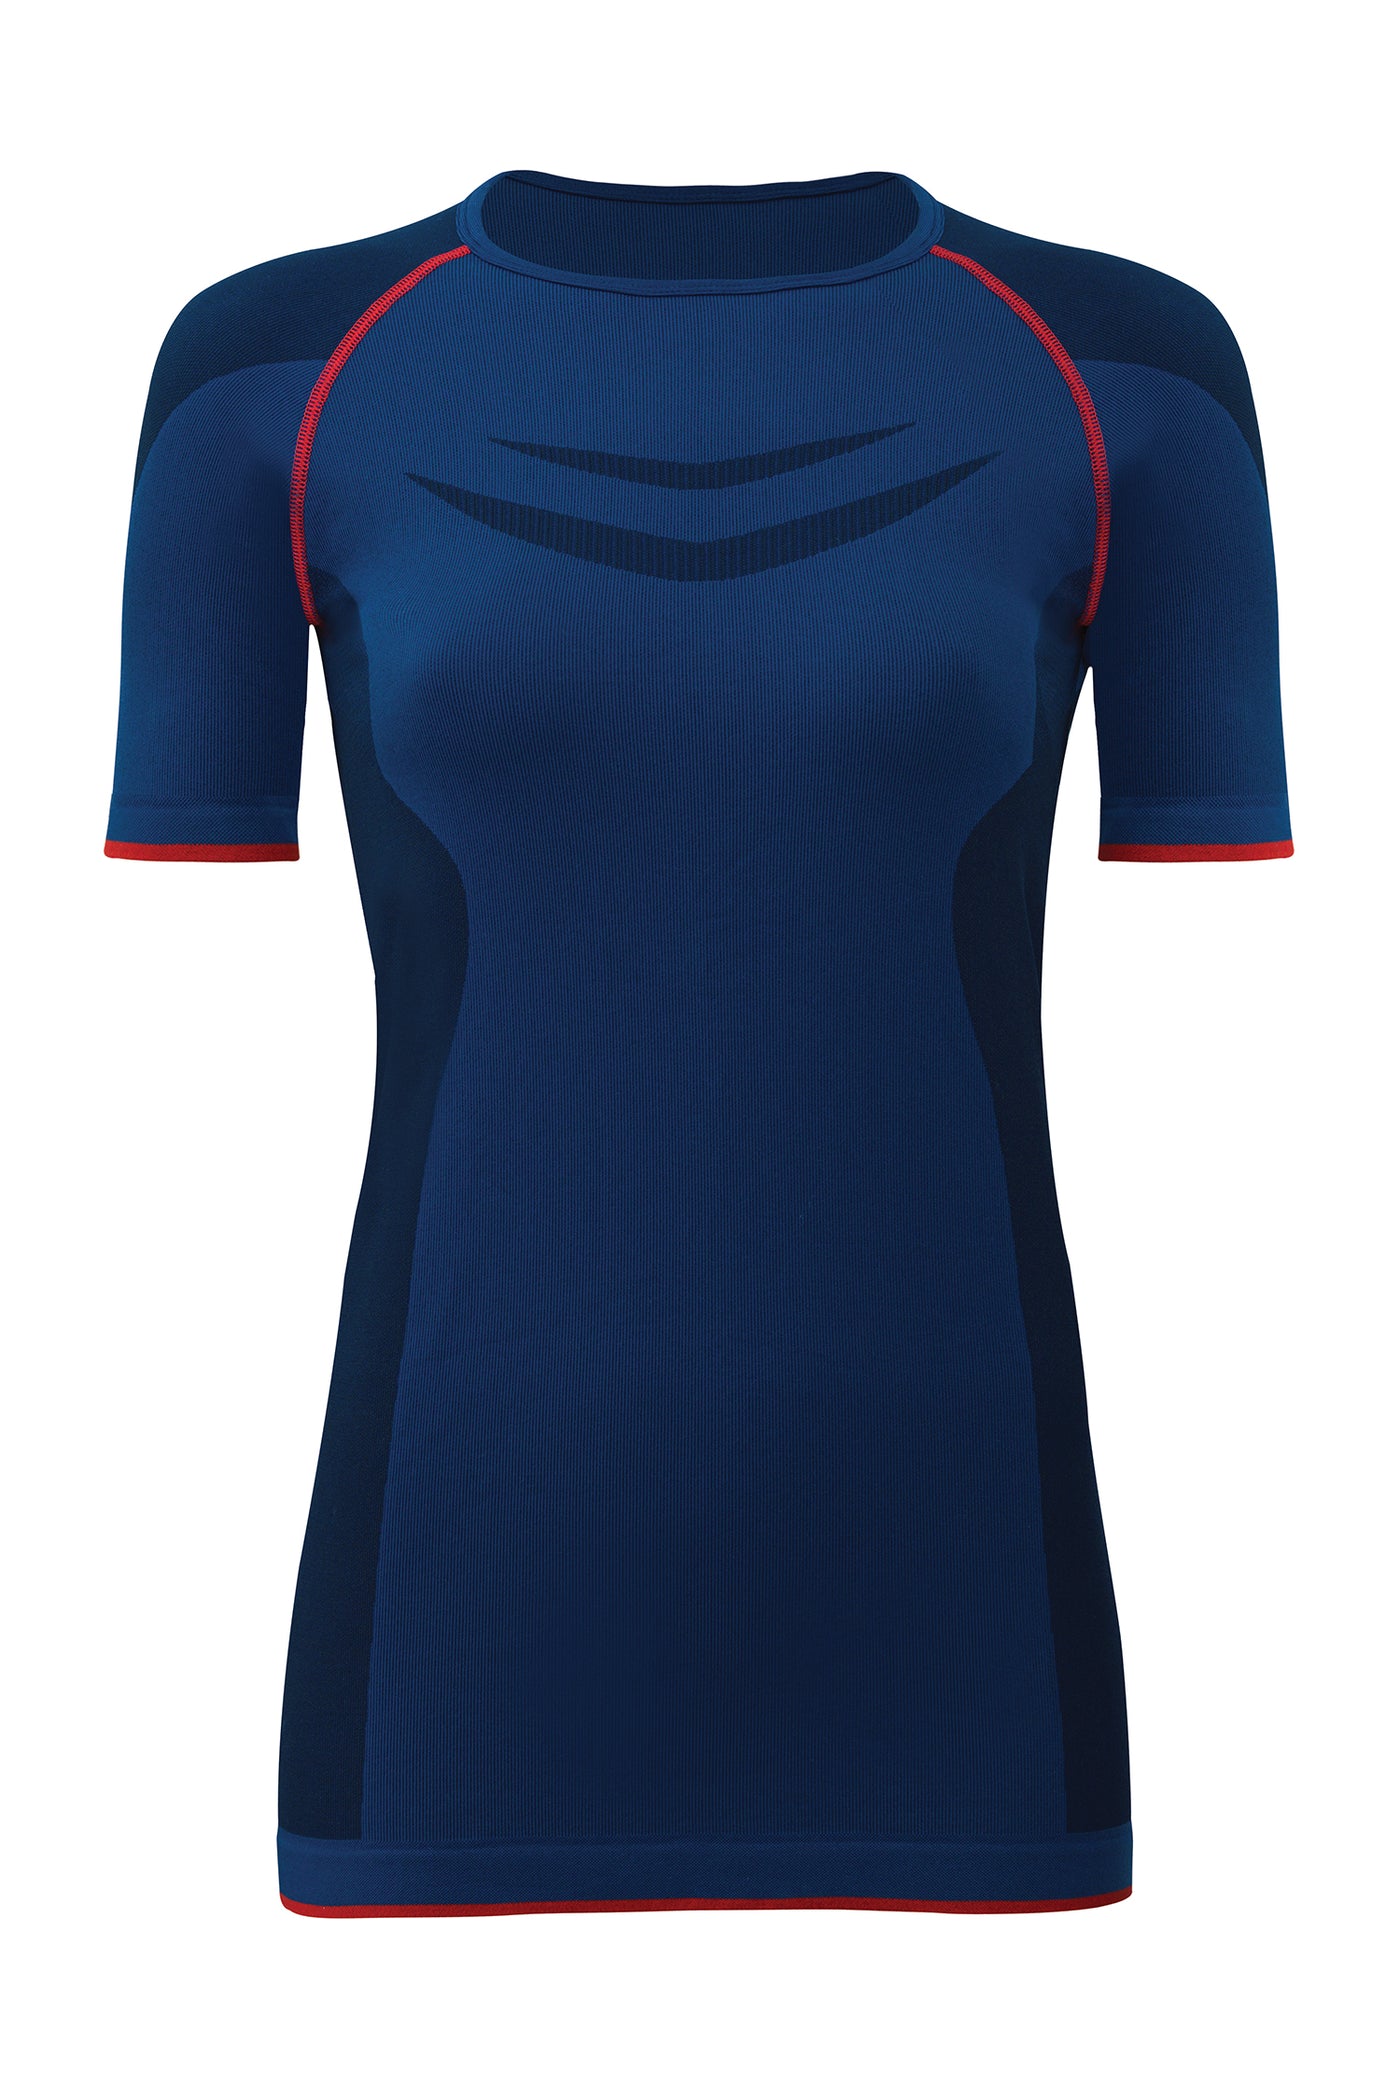 blackspade-Ladies' thermal seamless t-shirt-9570, level-2-underwear-navy